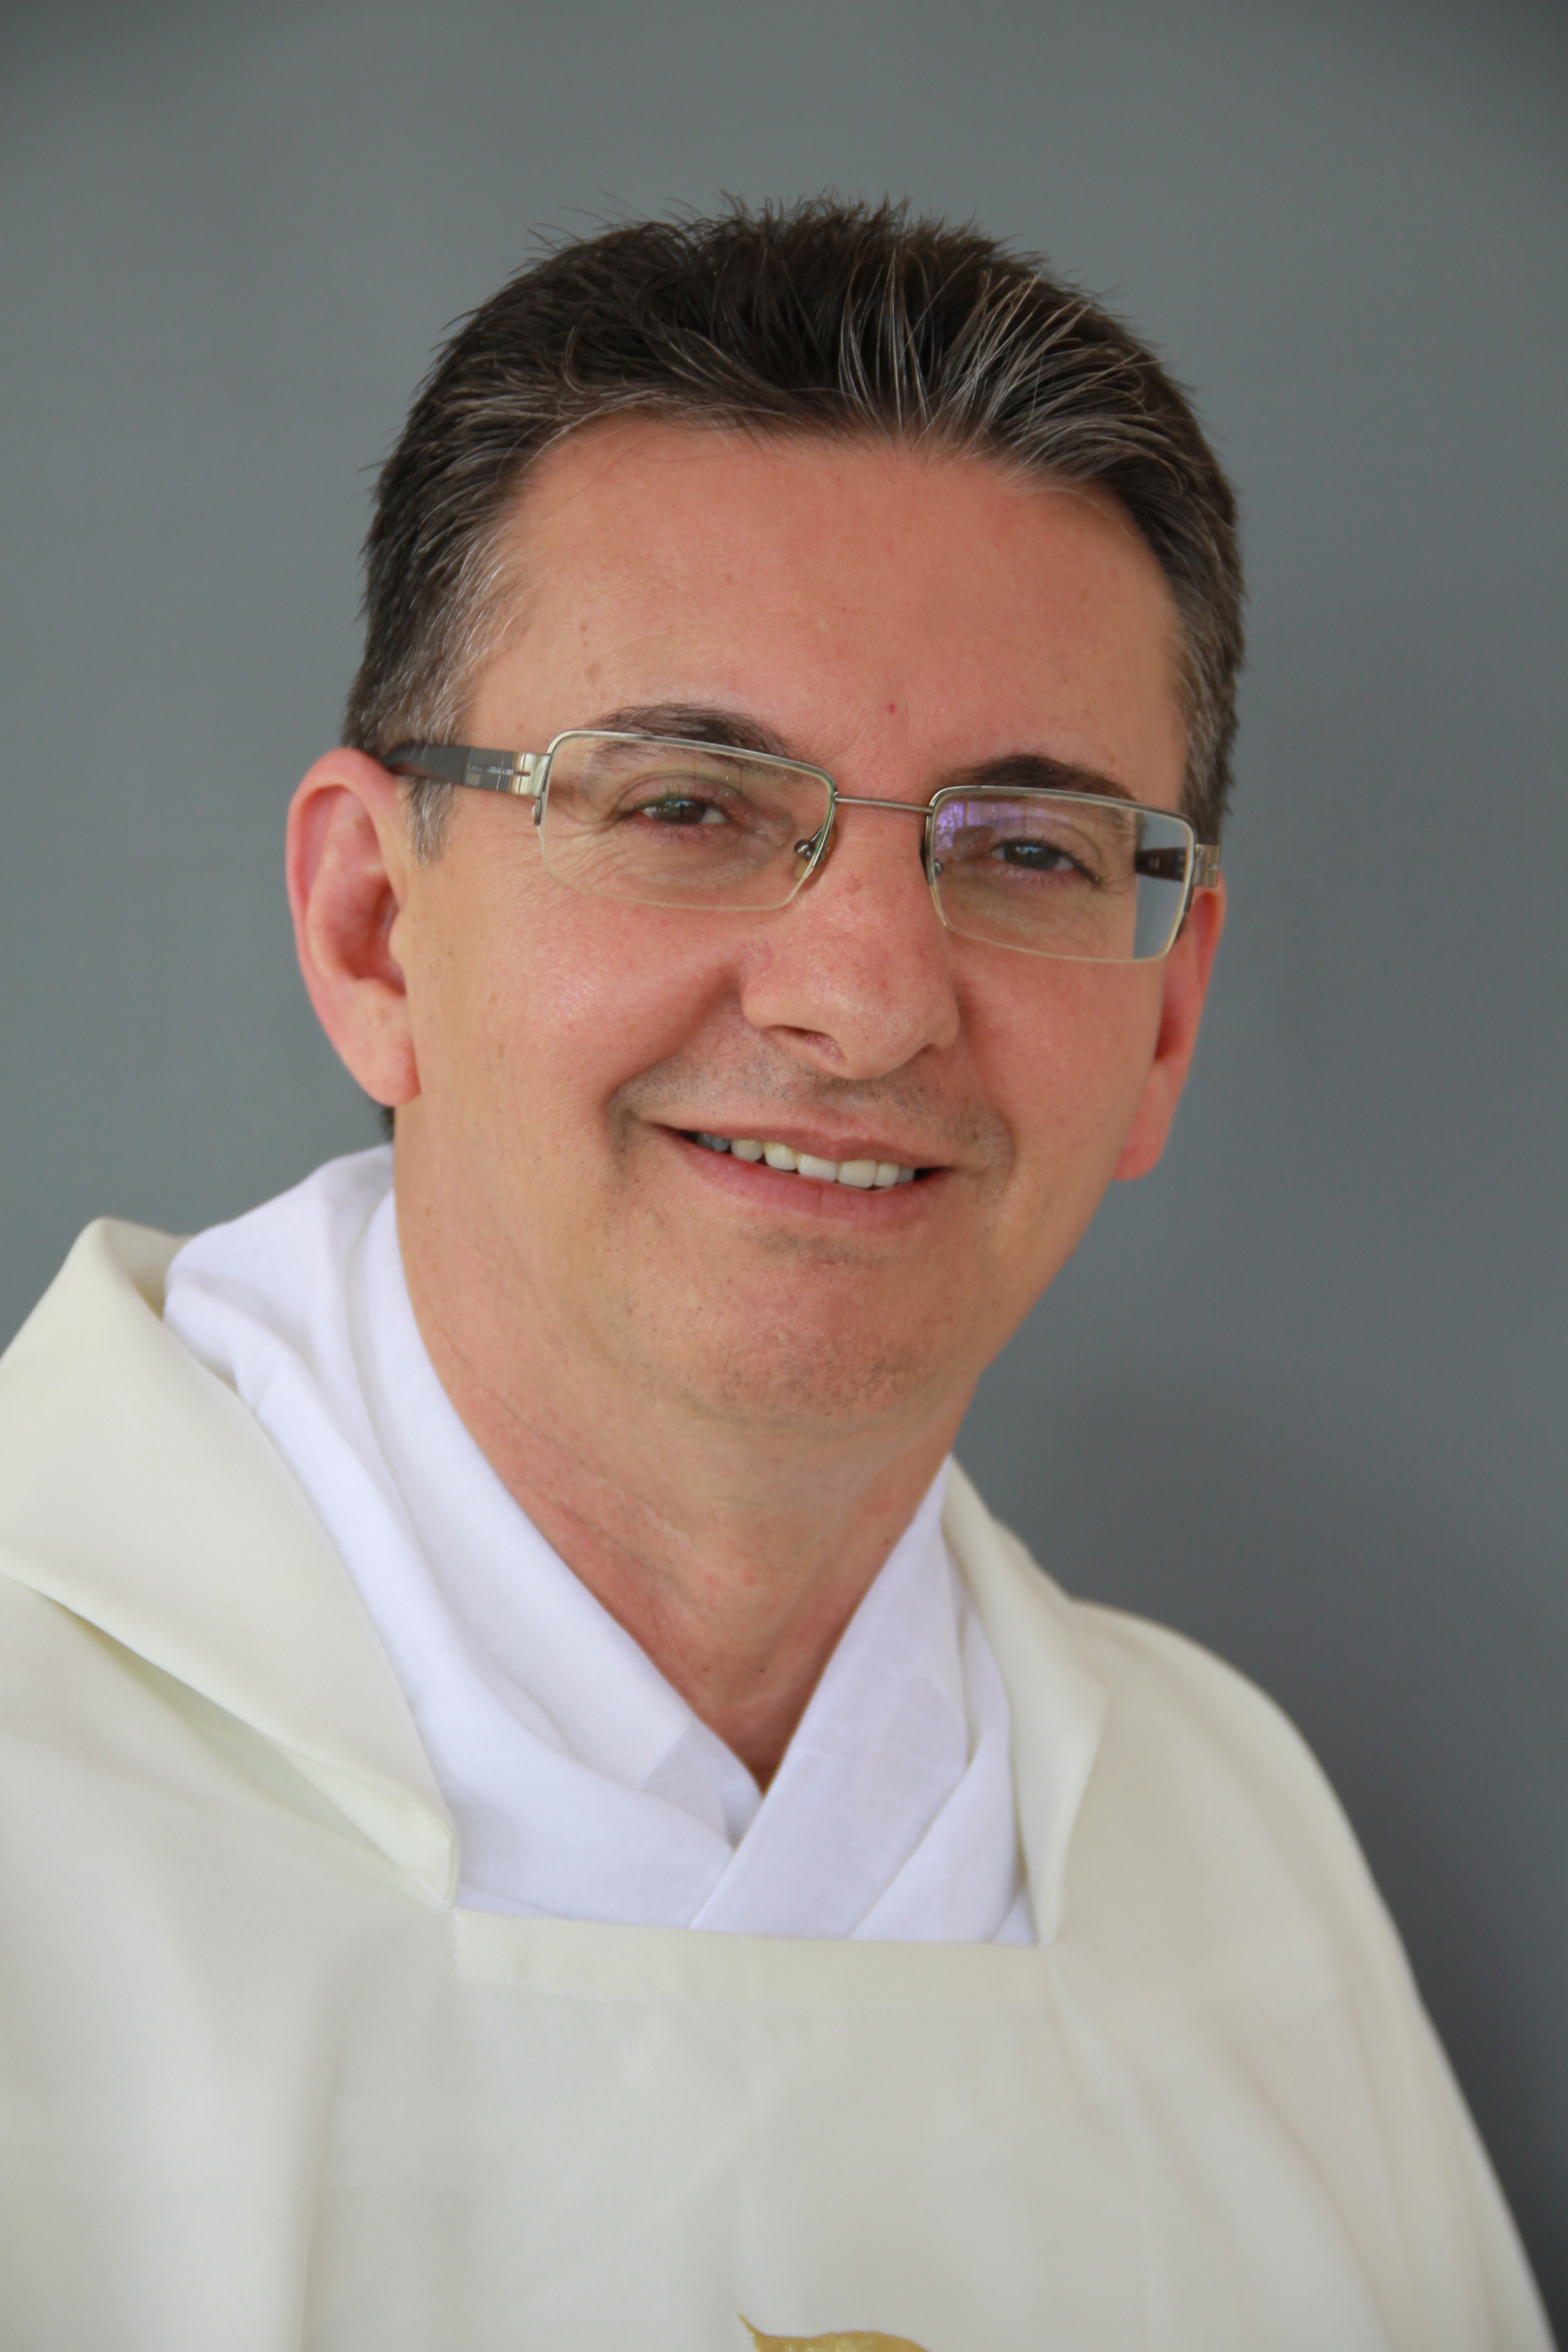 Vigário Geral da Arquidiocese de Natal é nomeado bispo para diocese piauiense